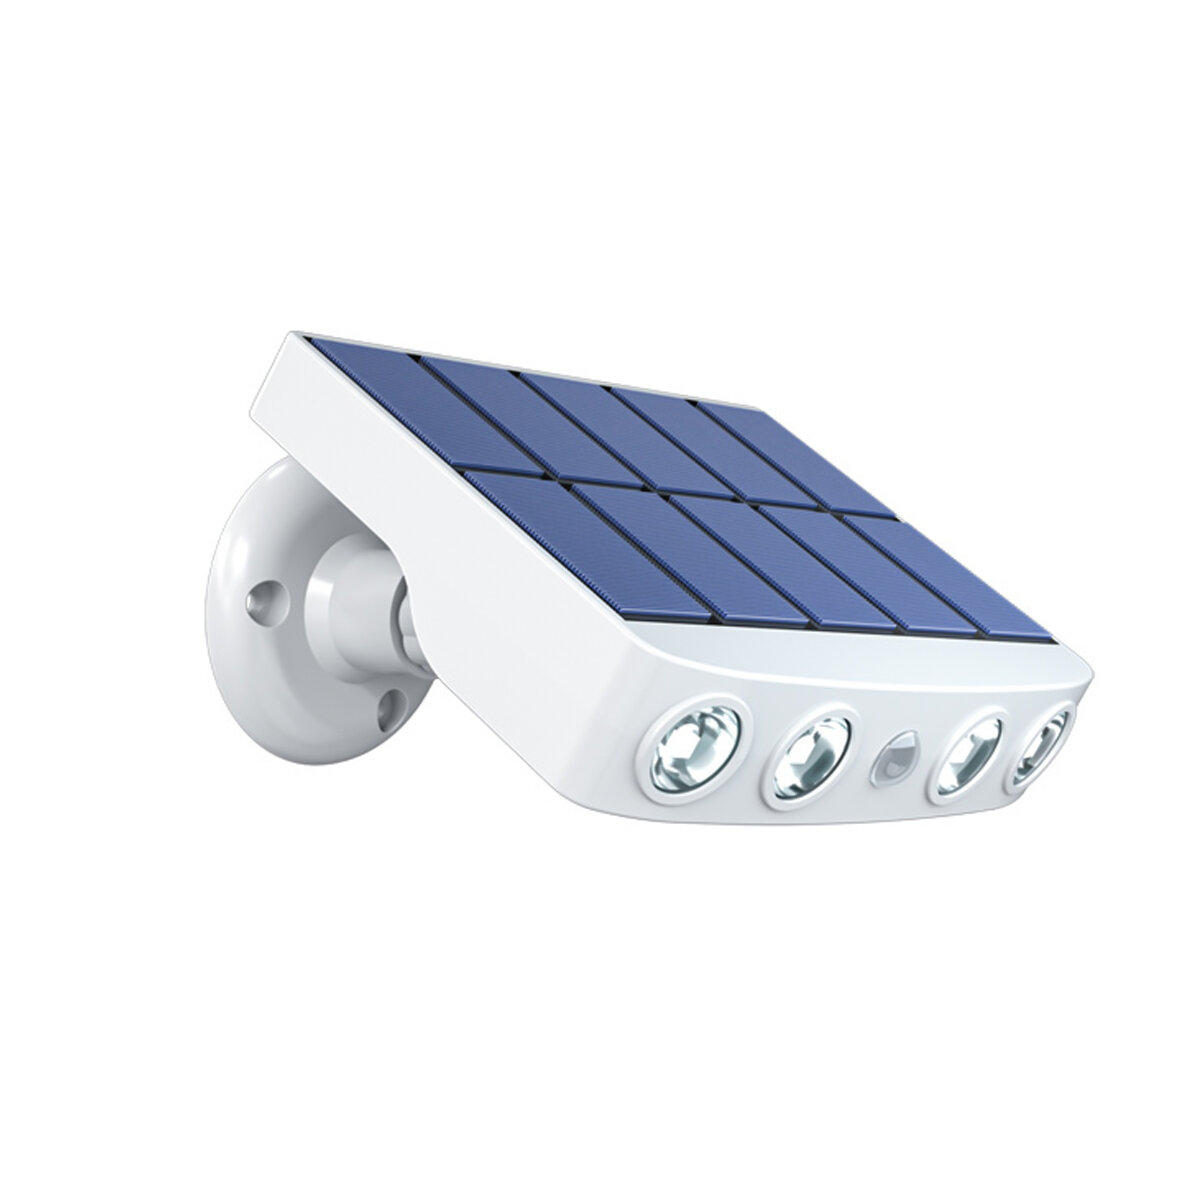 LED Solar Powered Wall Light IP65 Waterproof Outdoor Garden Light PIR Human Body Motion Sensor with Bracket for Path Str